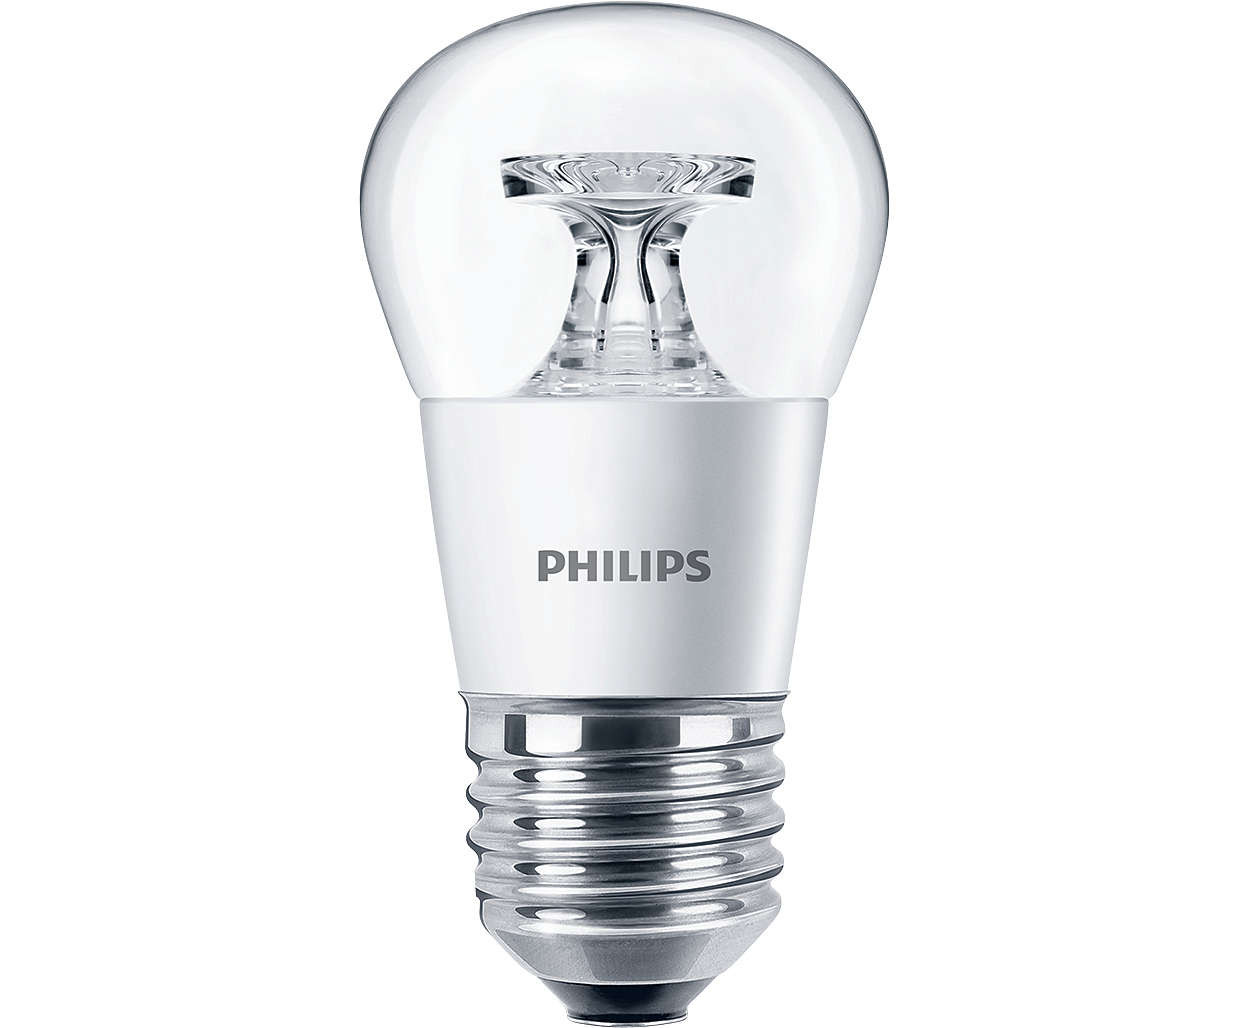 Philips CorePro LEDluster ND 4-25W E27 827 P45 CL